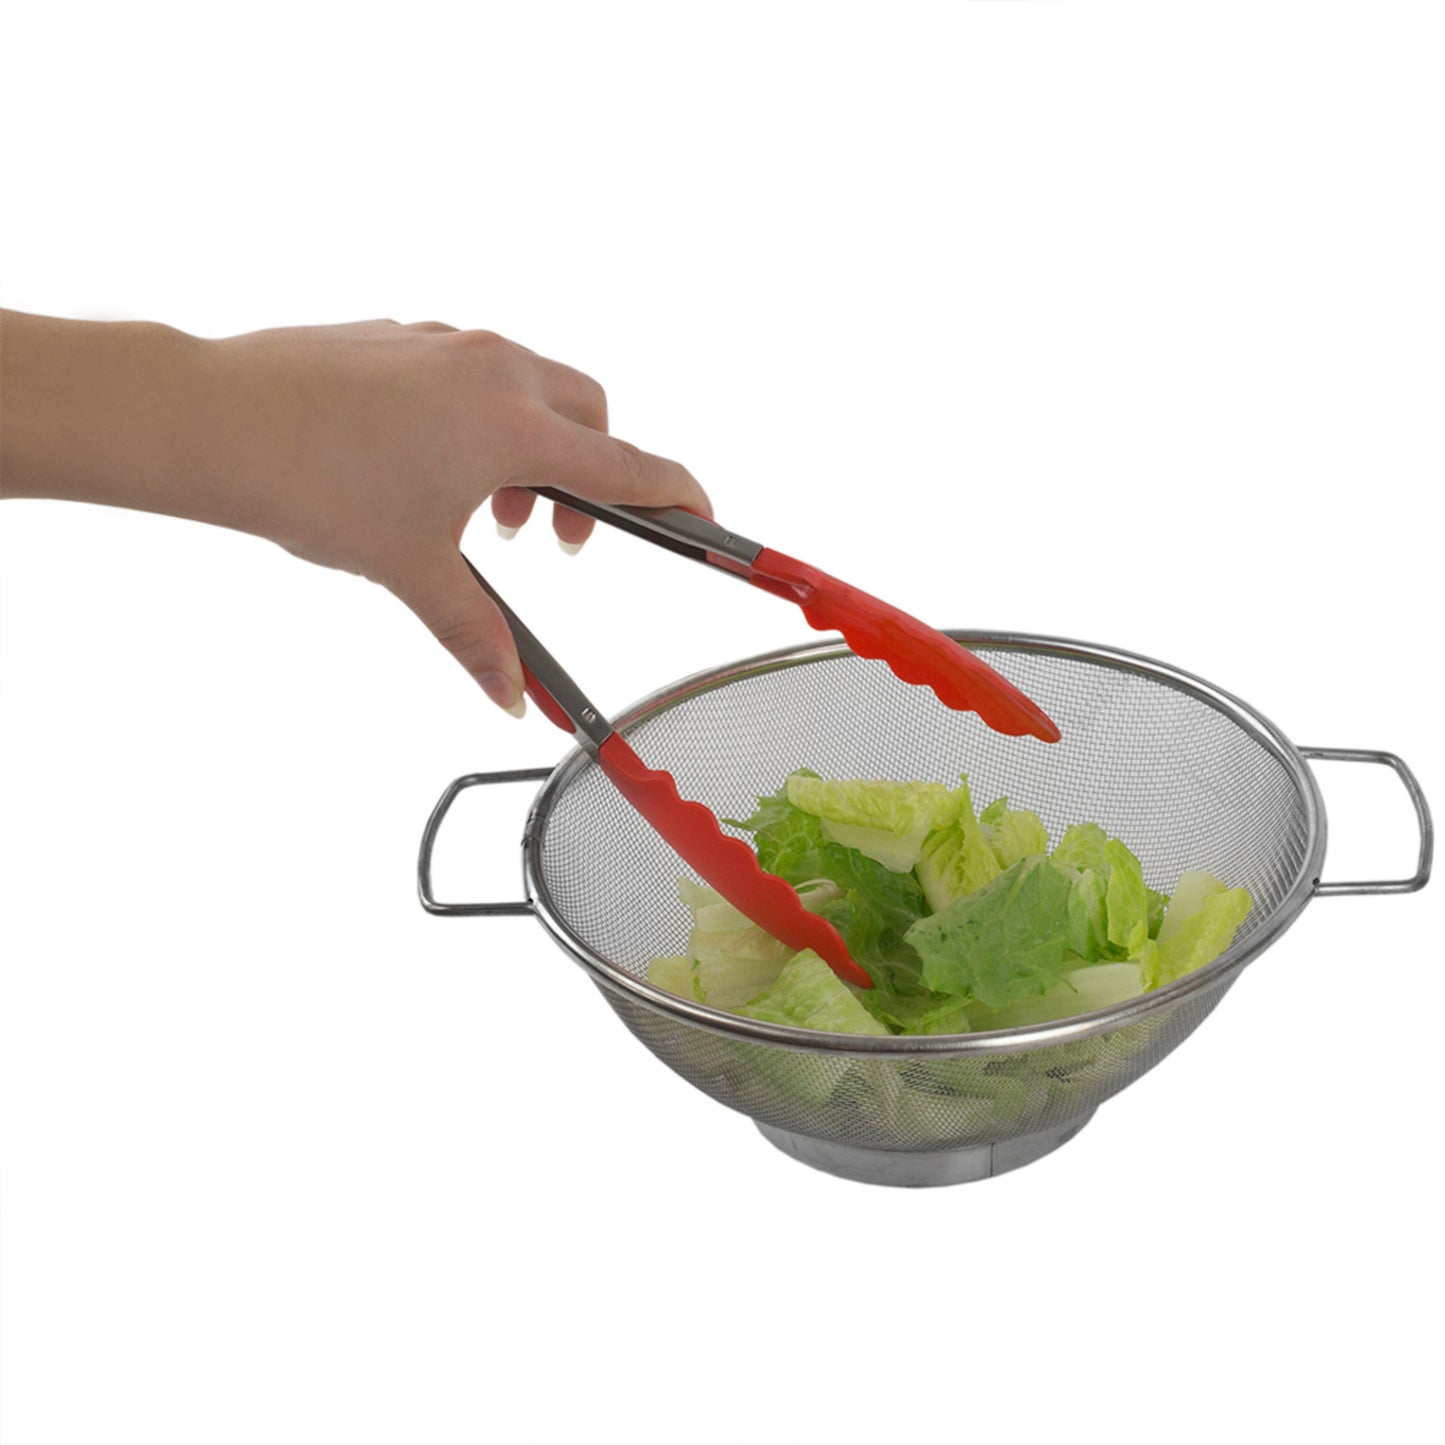 Home Basics 9" Salad Tongs - Red